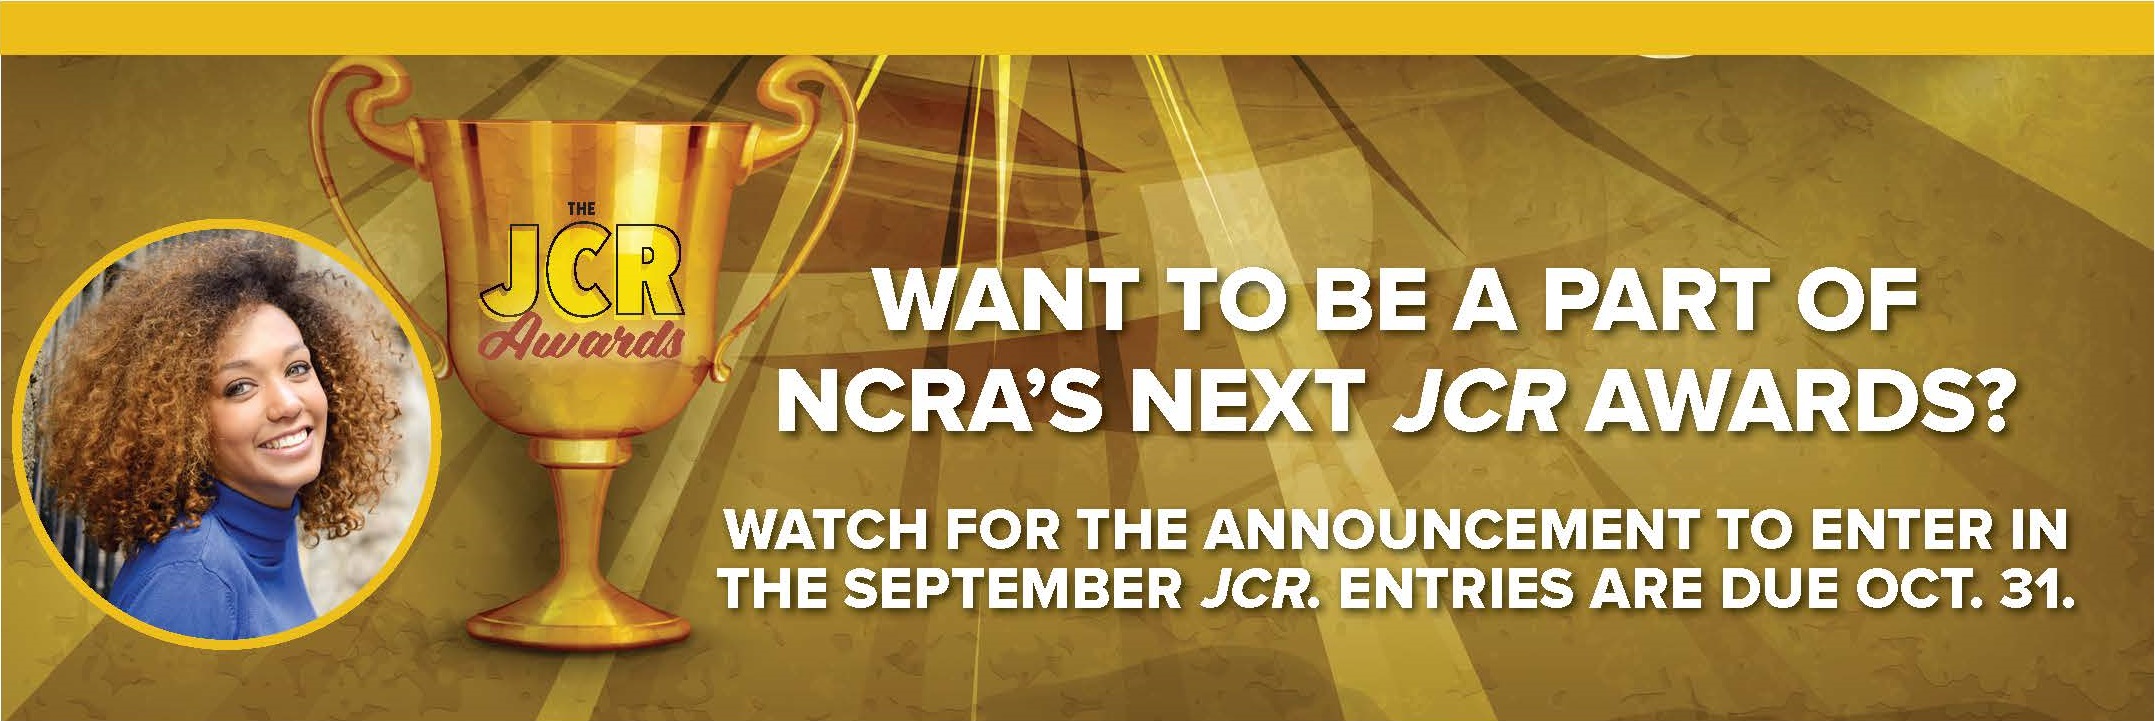 Next JCR Awards